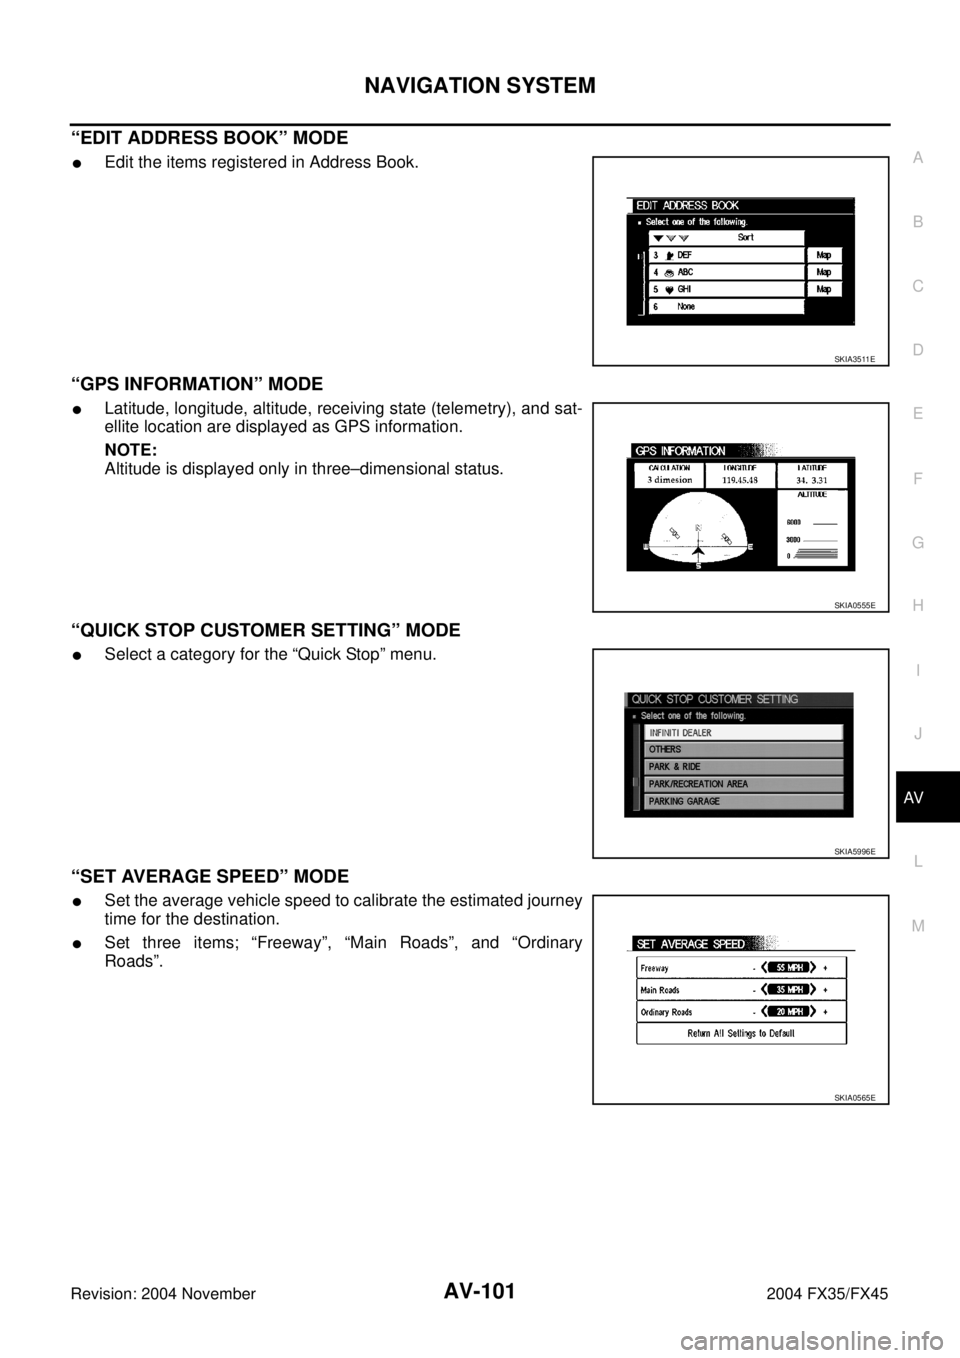 INFINITI FX35 2004  Service Manual NAVIGATION SYSTEM
AV-101
C
D
E
F
G
H
I
J
L
MA
B
AV
Revision: 2004 November 2004 FX35/FX45
“EDIT ADDRESS BOOK” MODE
Edit the items registered in Address Book.
“GPS INFORMATION” MODE
Latitude,